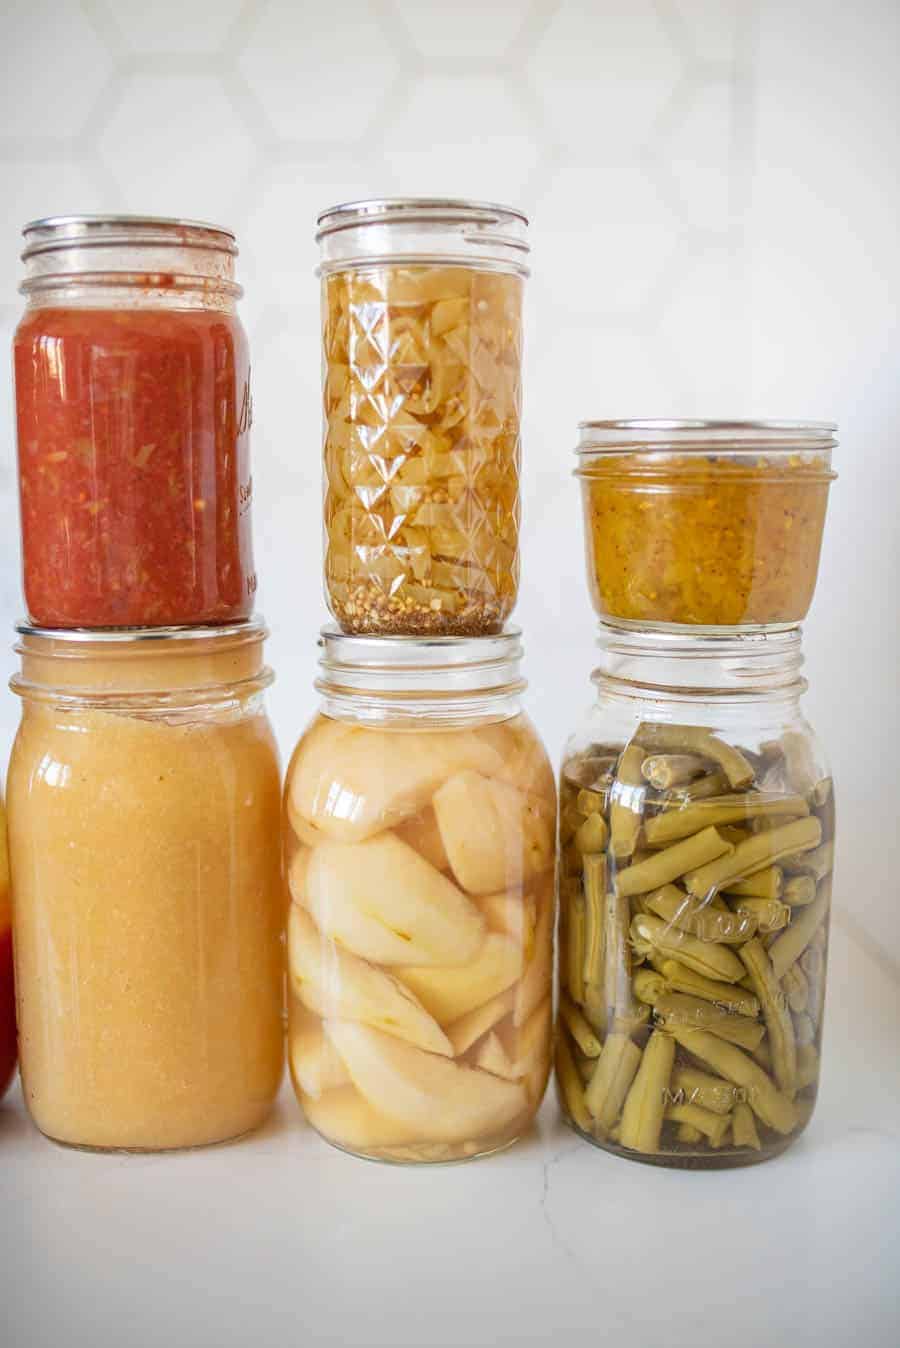 Make Food Last Longer: Top 7 Kitchen Ingredients to Preserve Foods